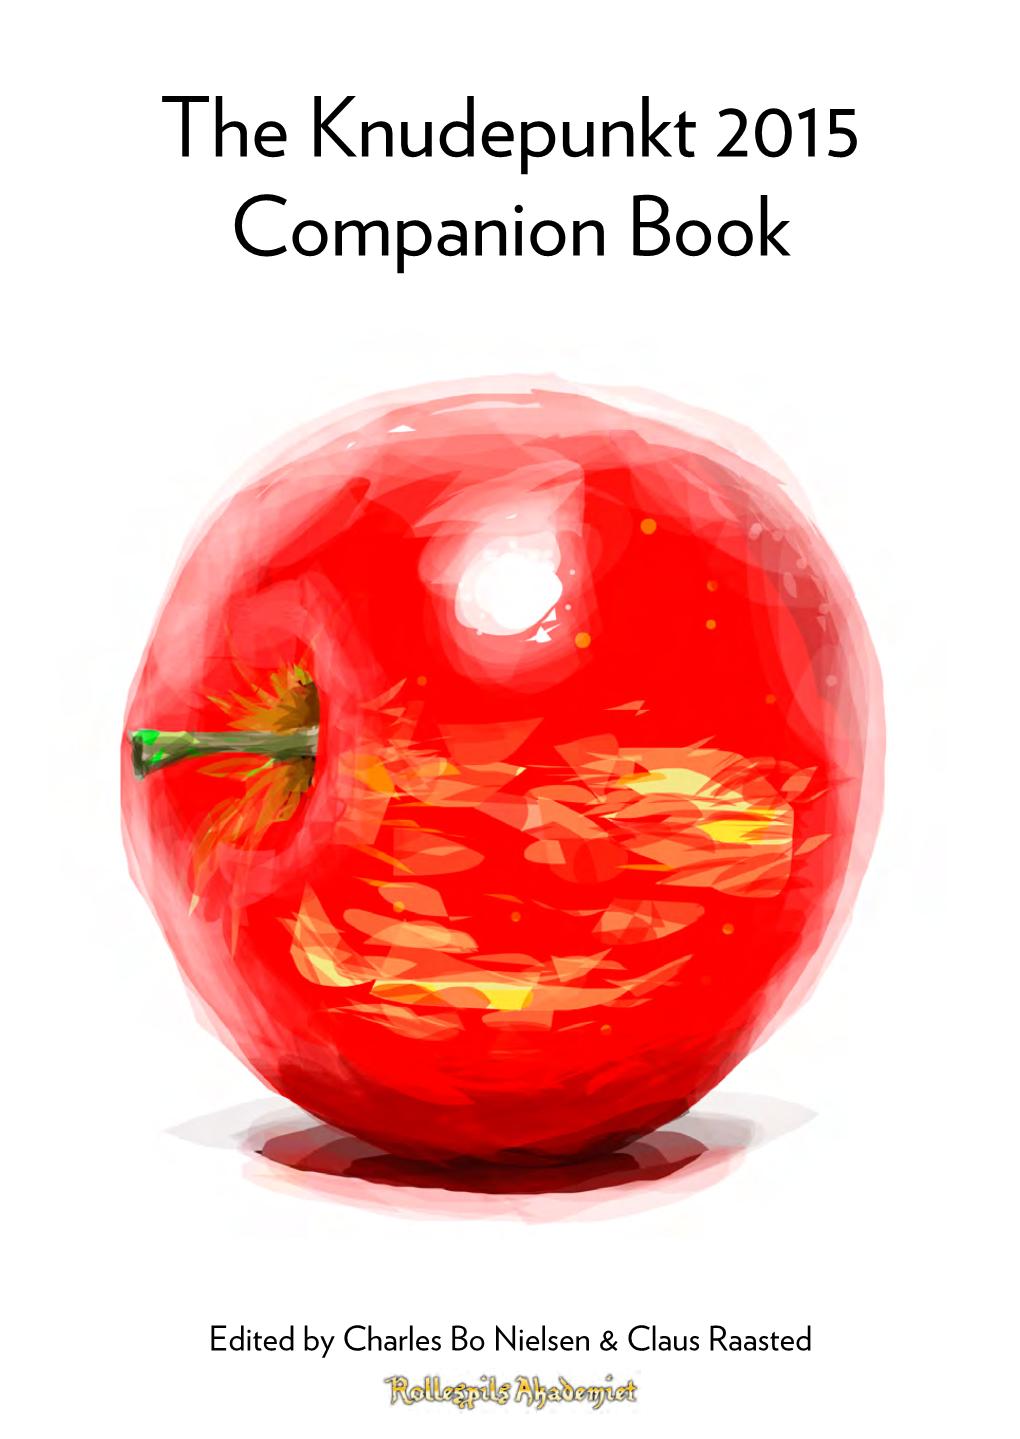 The Knudepunkt 2015 Companion Book